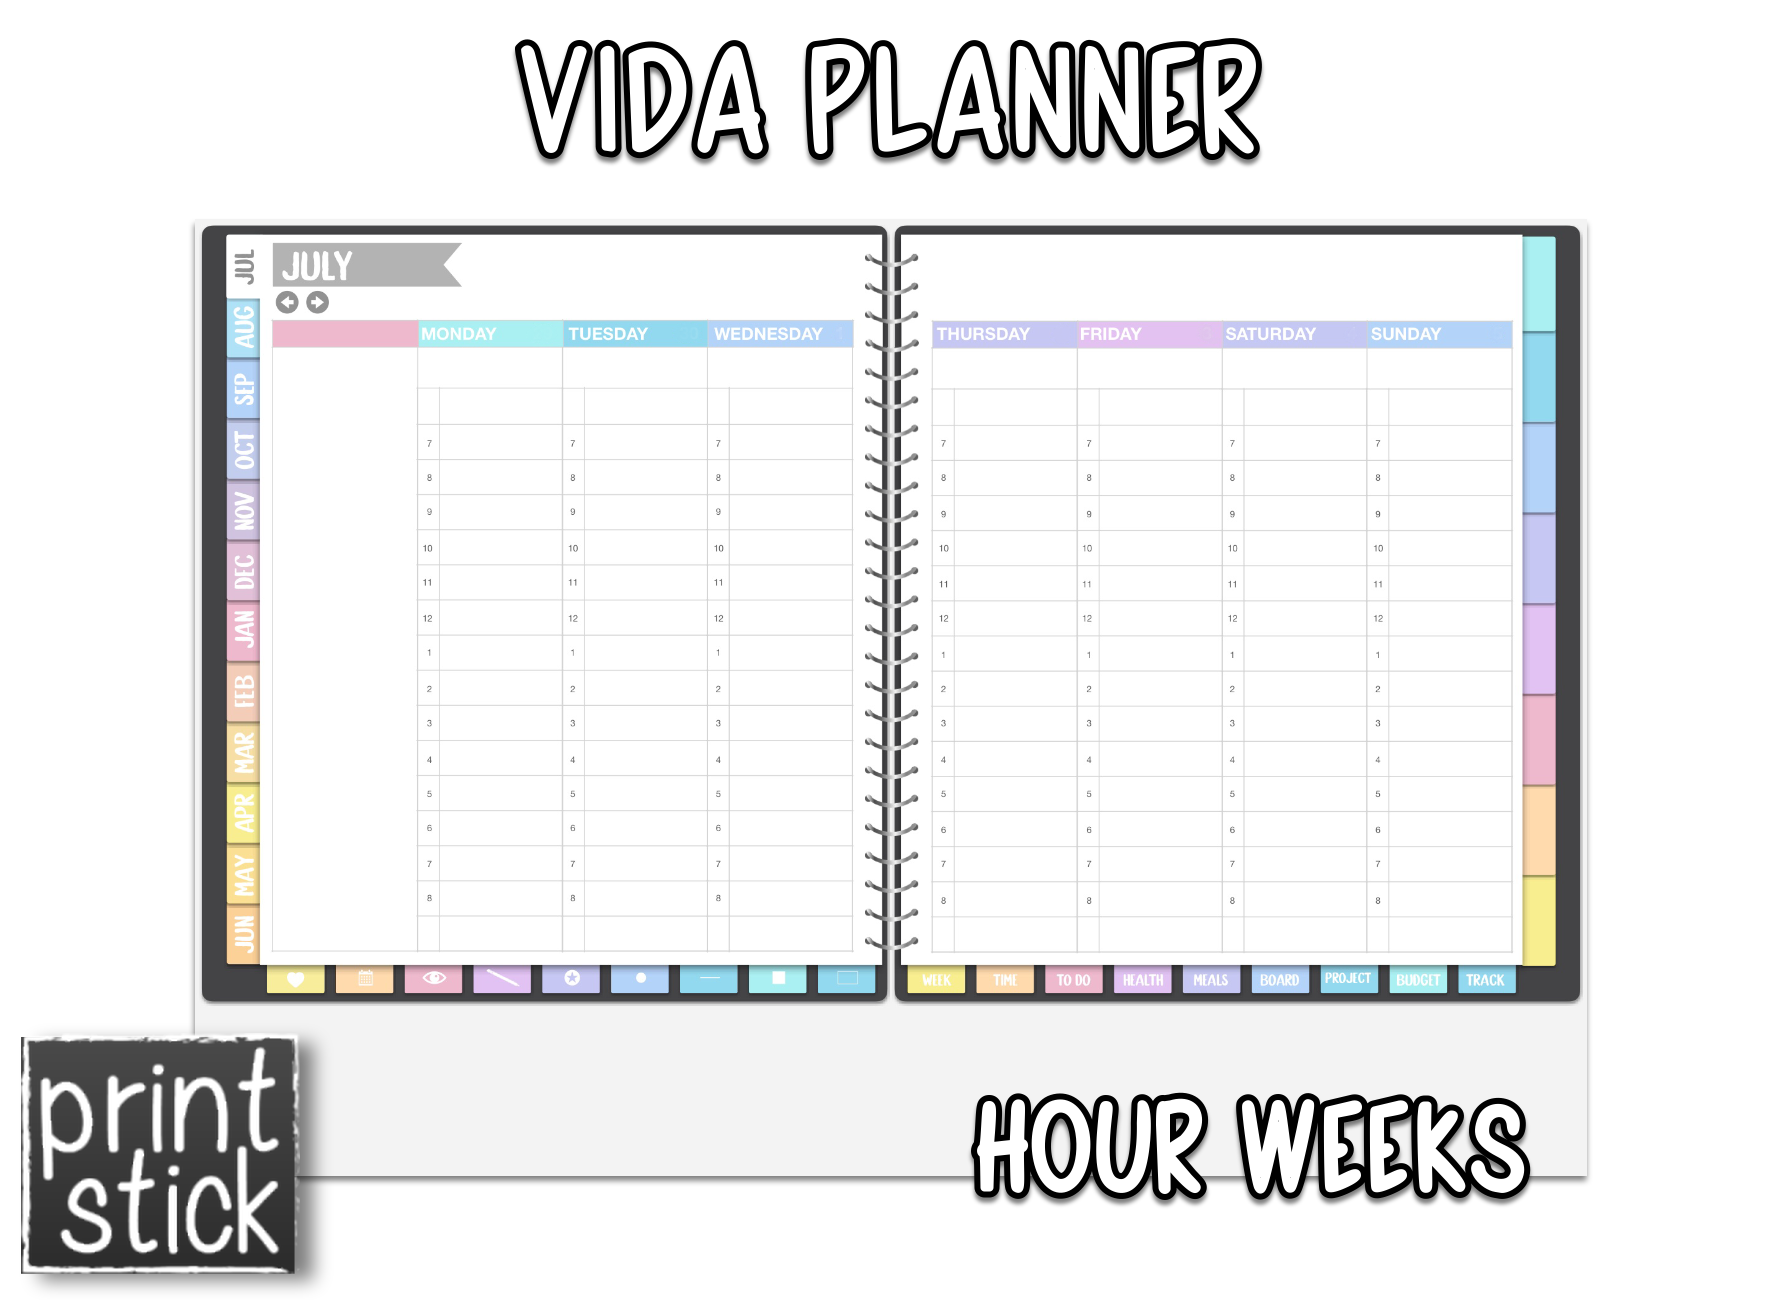 Vida Planner - Undated - Print Stick